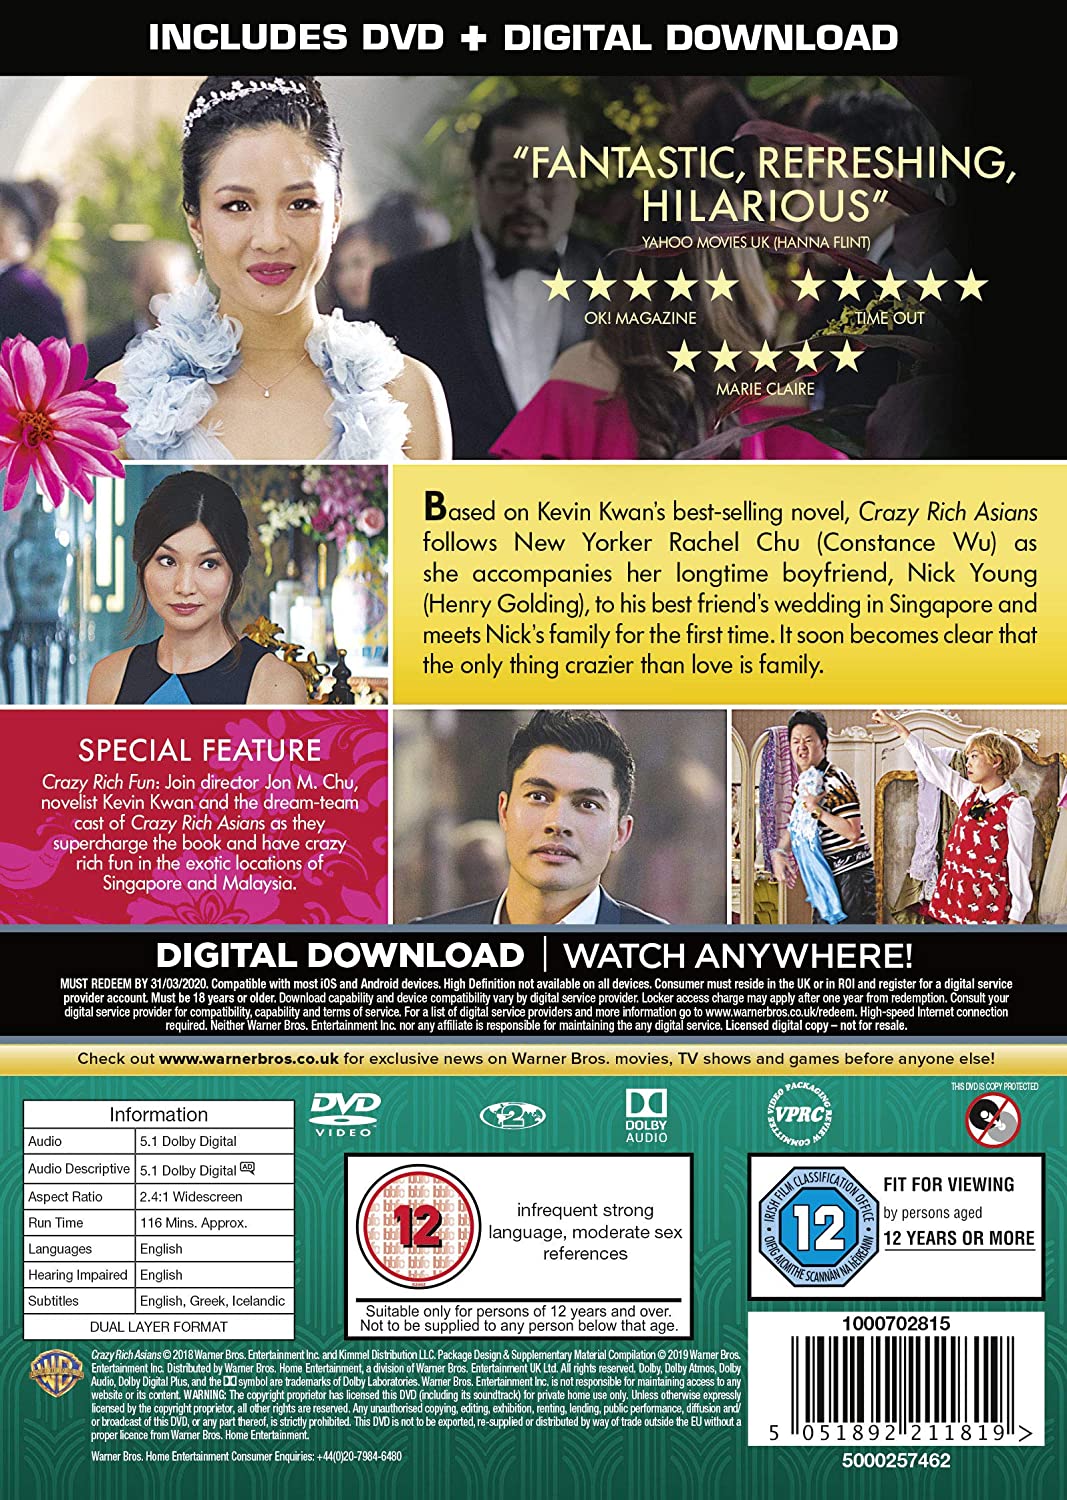 Crazy Rich Asians - Romance/Comedy-drama [DVD]